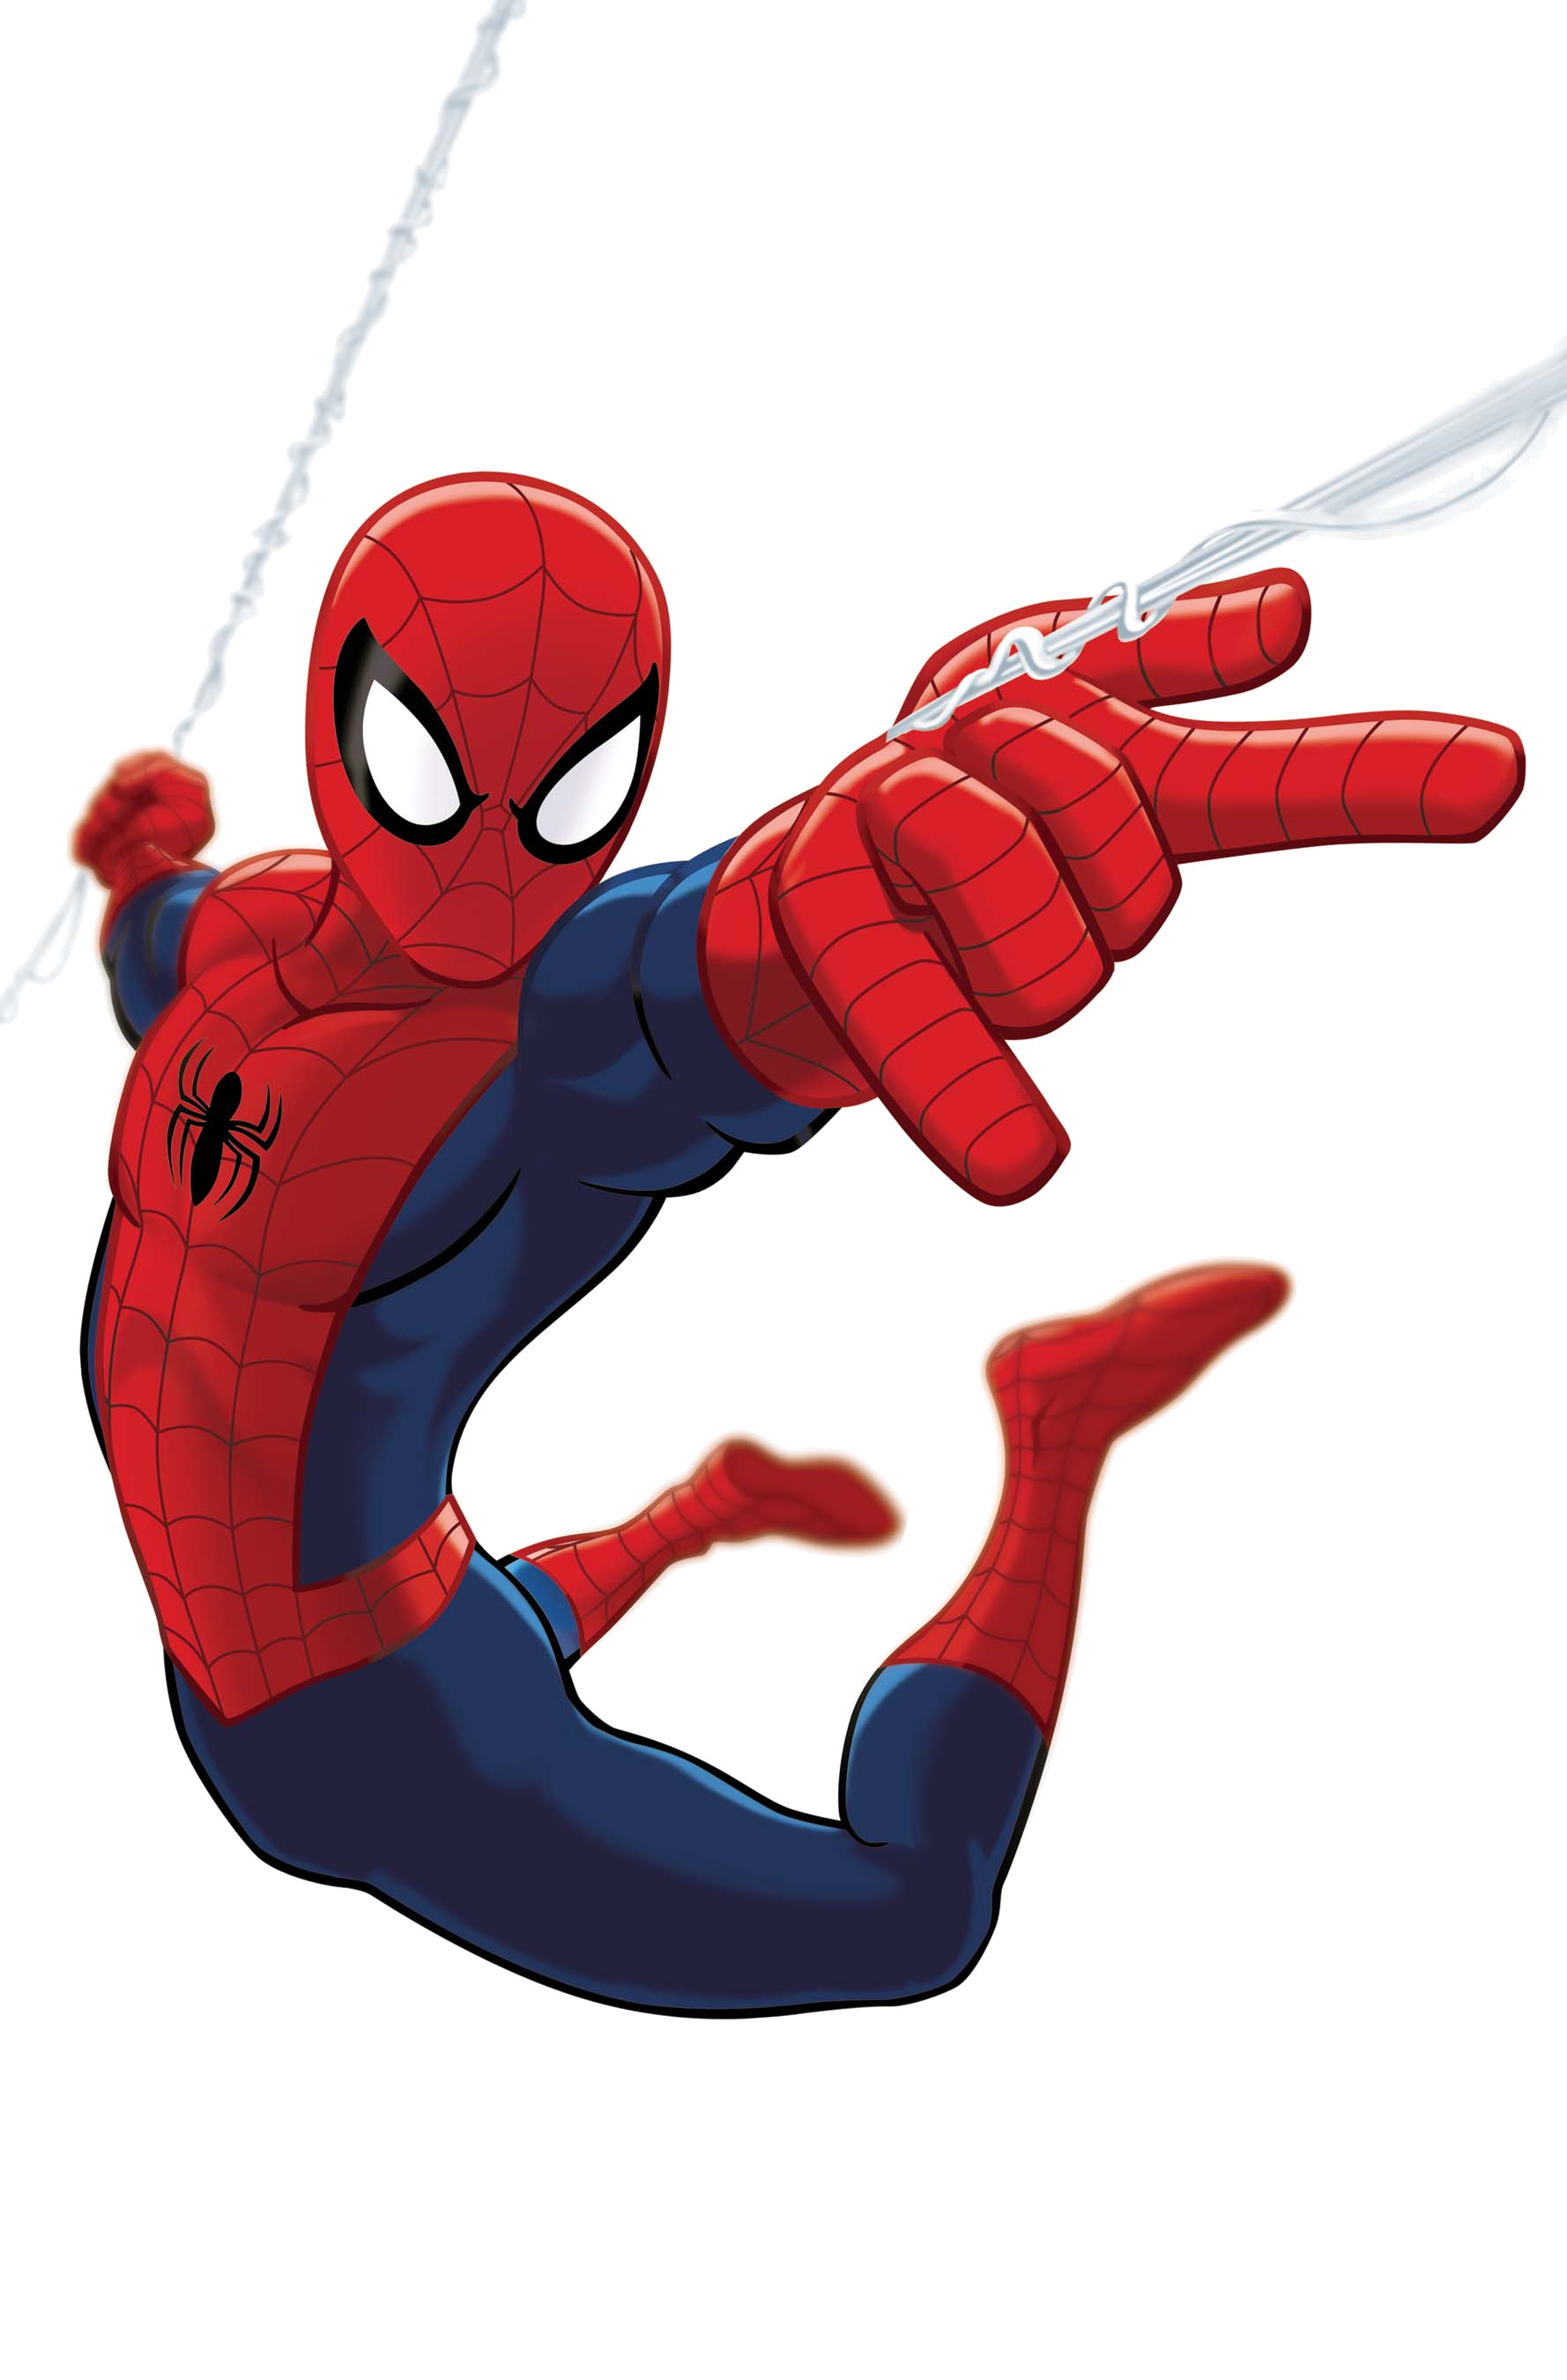 Spider-Man | Ultimate Spider-Man Animated Series Wiki | FANDOM powered